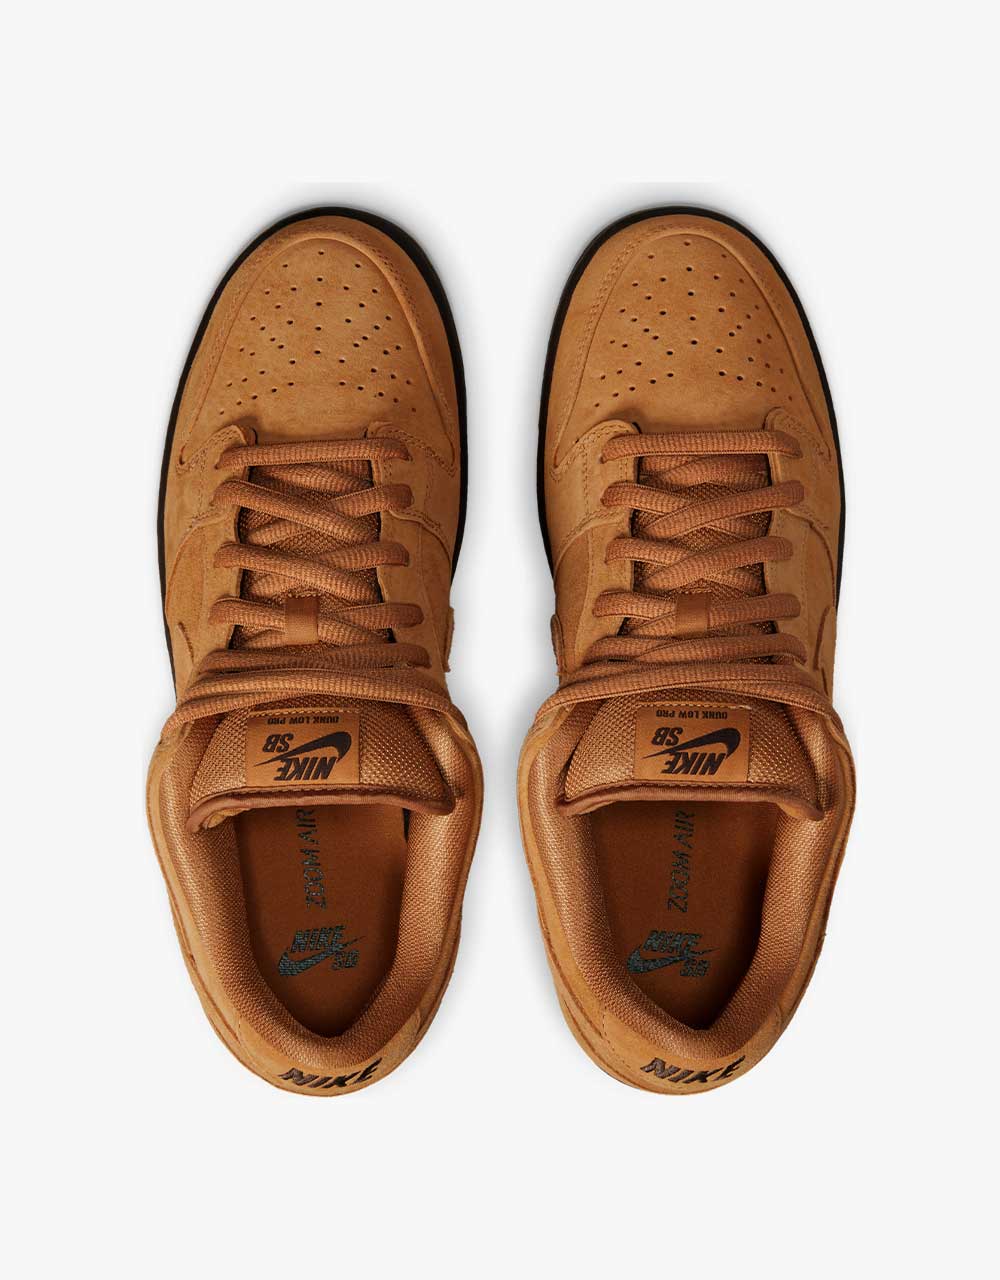 Nike SB Dunk Low Pro Skate Shoes - Flax/Flax-Flax-Baroque Brown